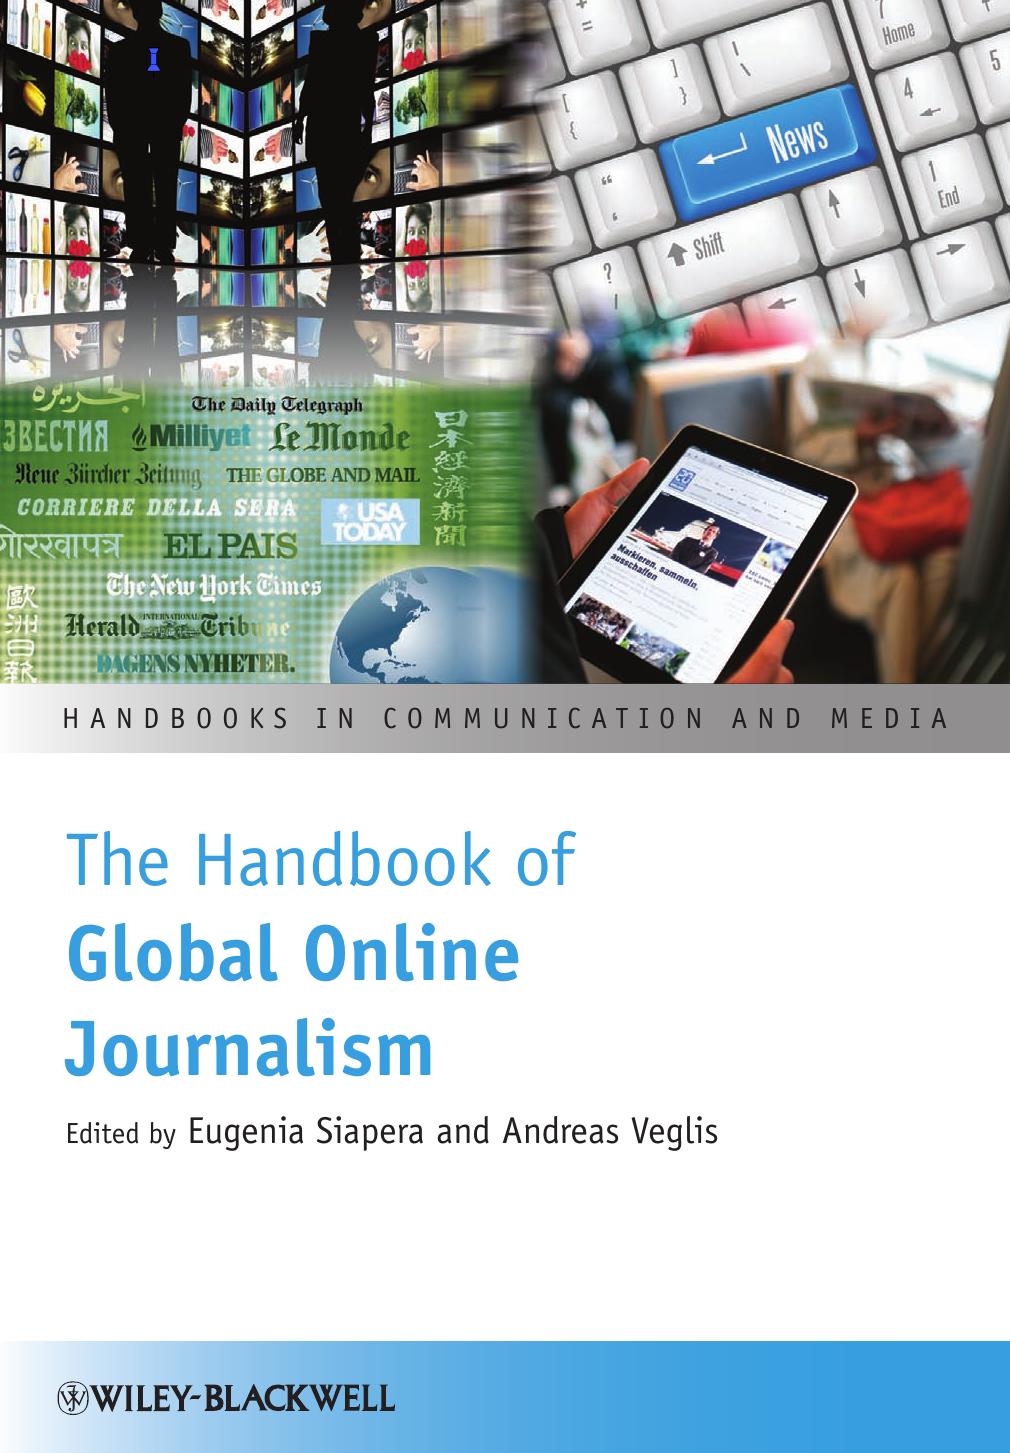 The Handbook of Global Online Journalism